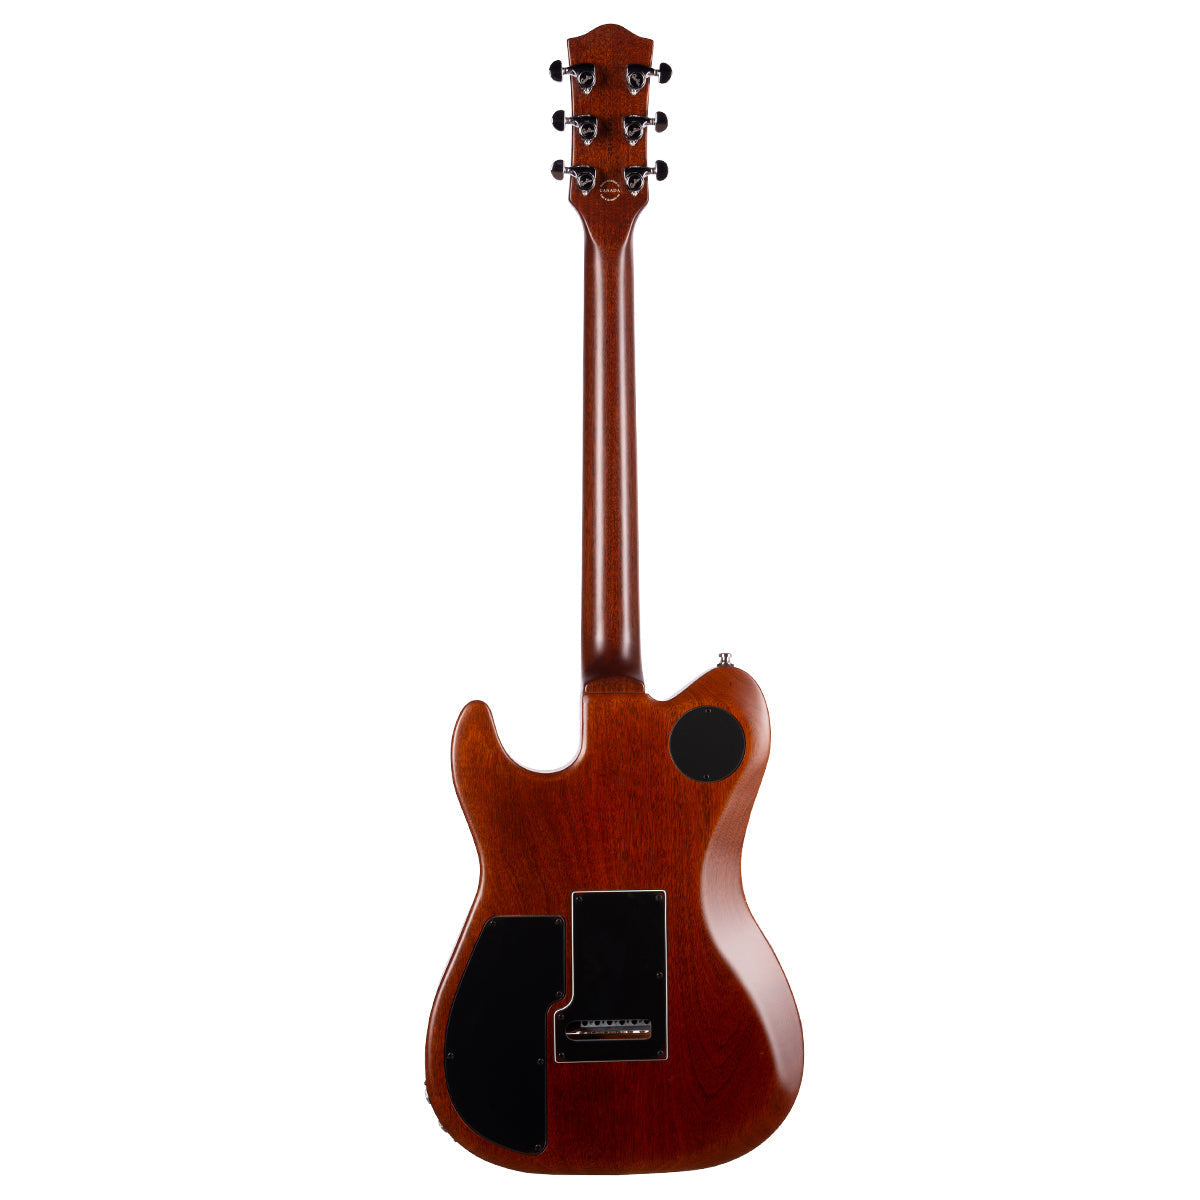 Godin Radium-X Electric Guitar ~ Rustic Burst SG, Electric Guitar for sale at Richards Guitars.